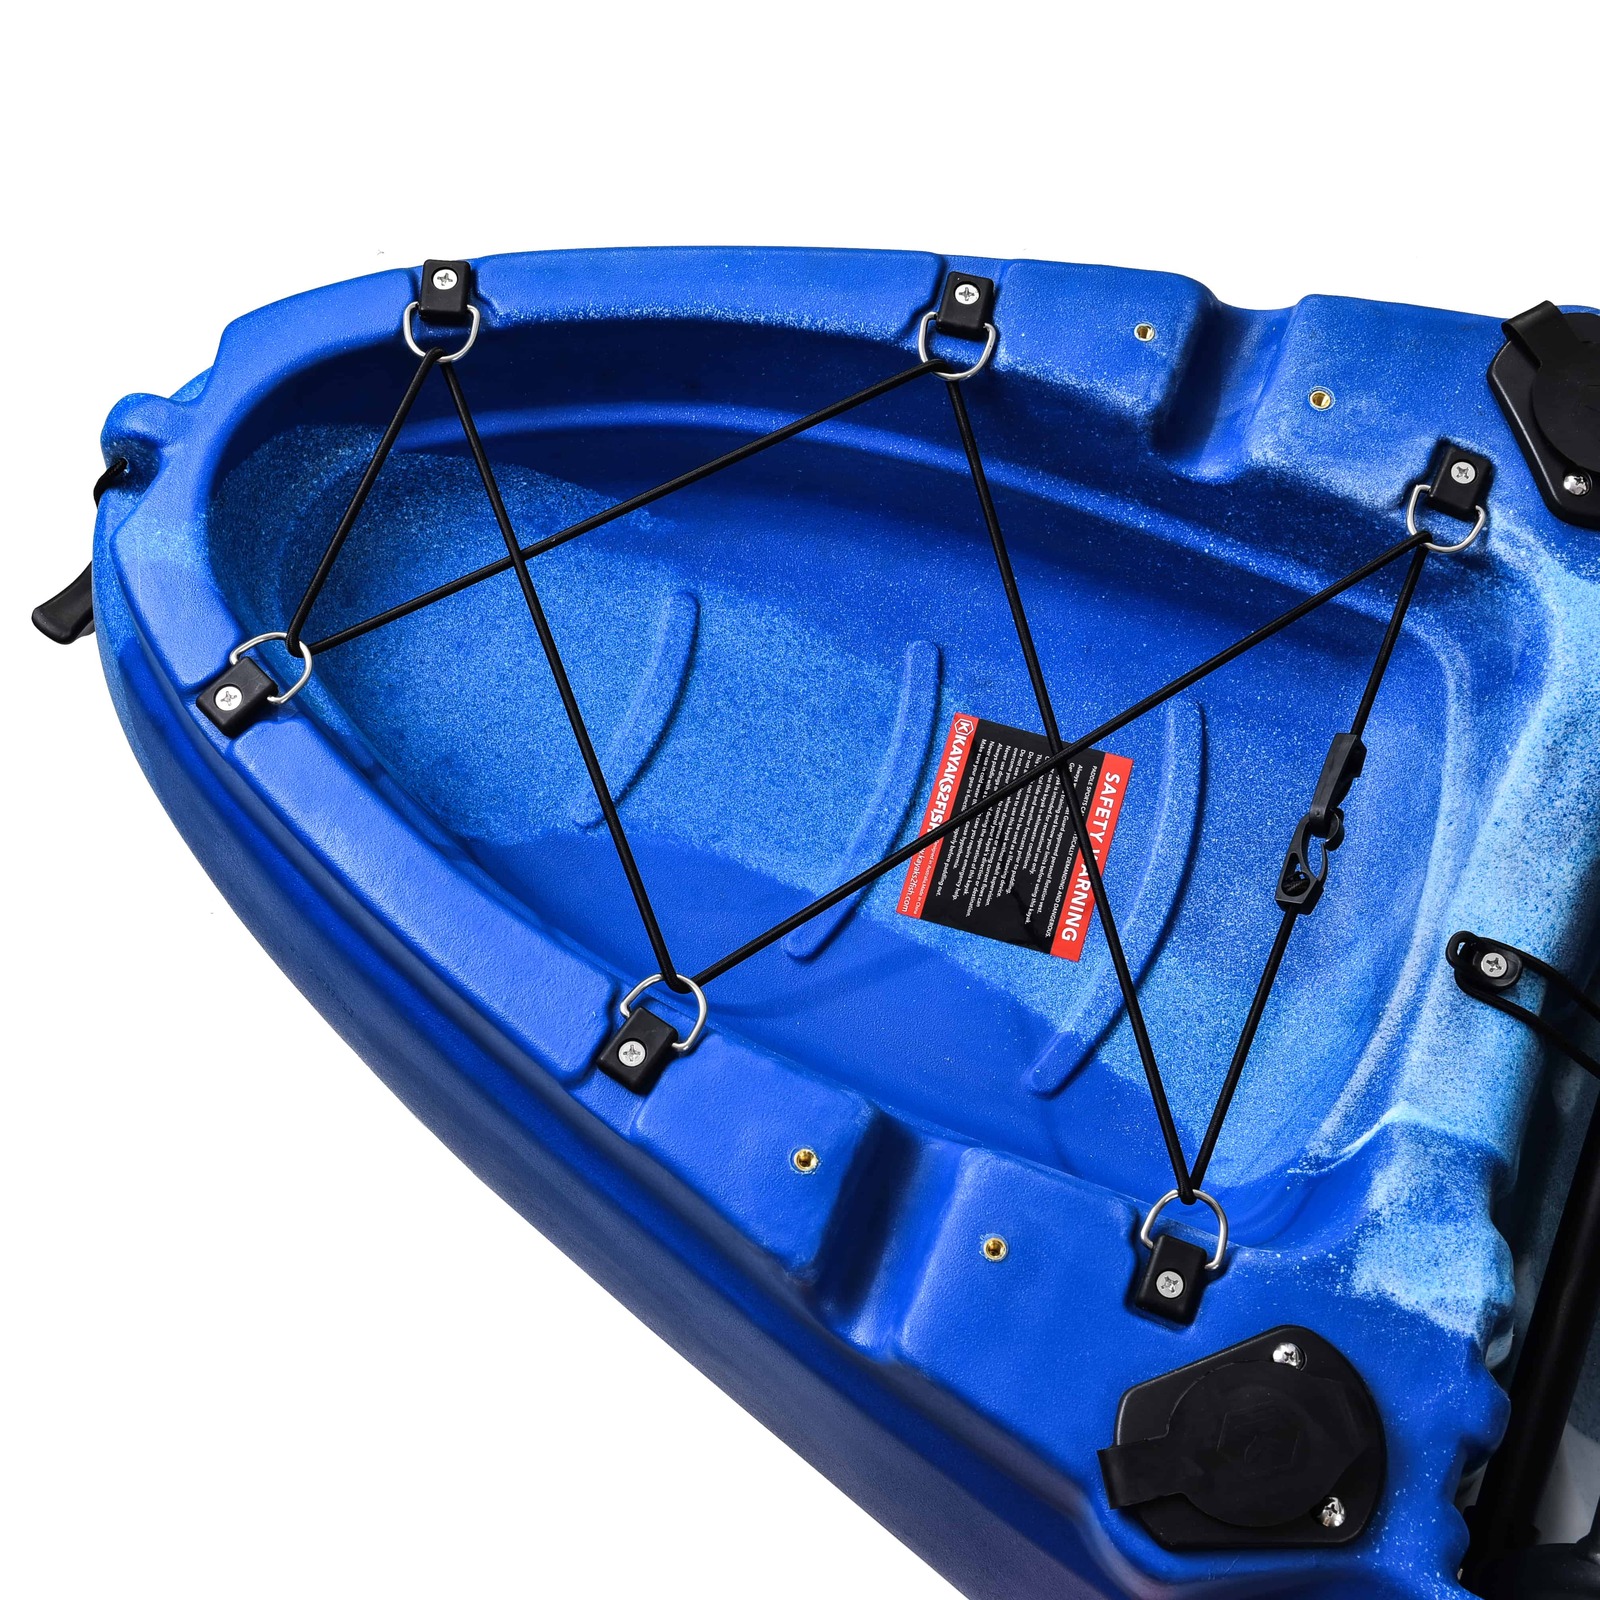 Eagle Pro Double Fishing Kayak Package - Blue Camo [Melbourne]